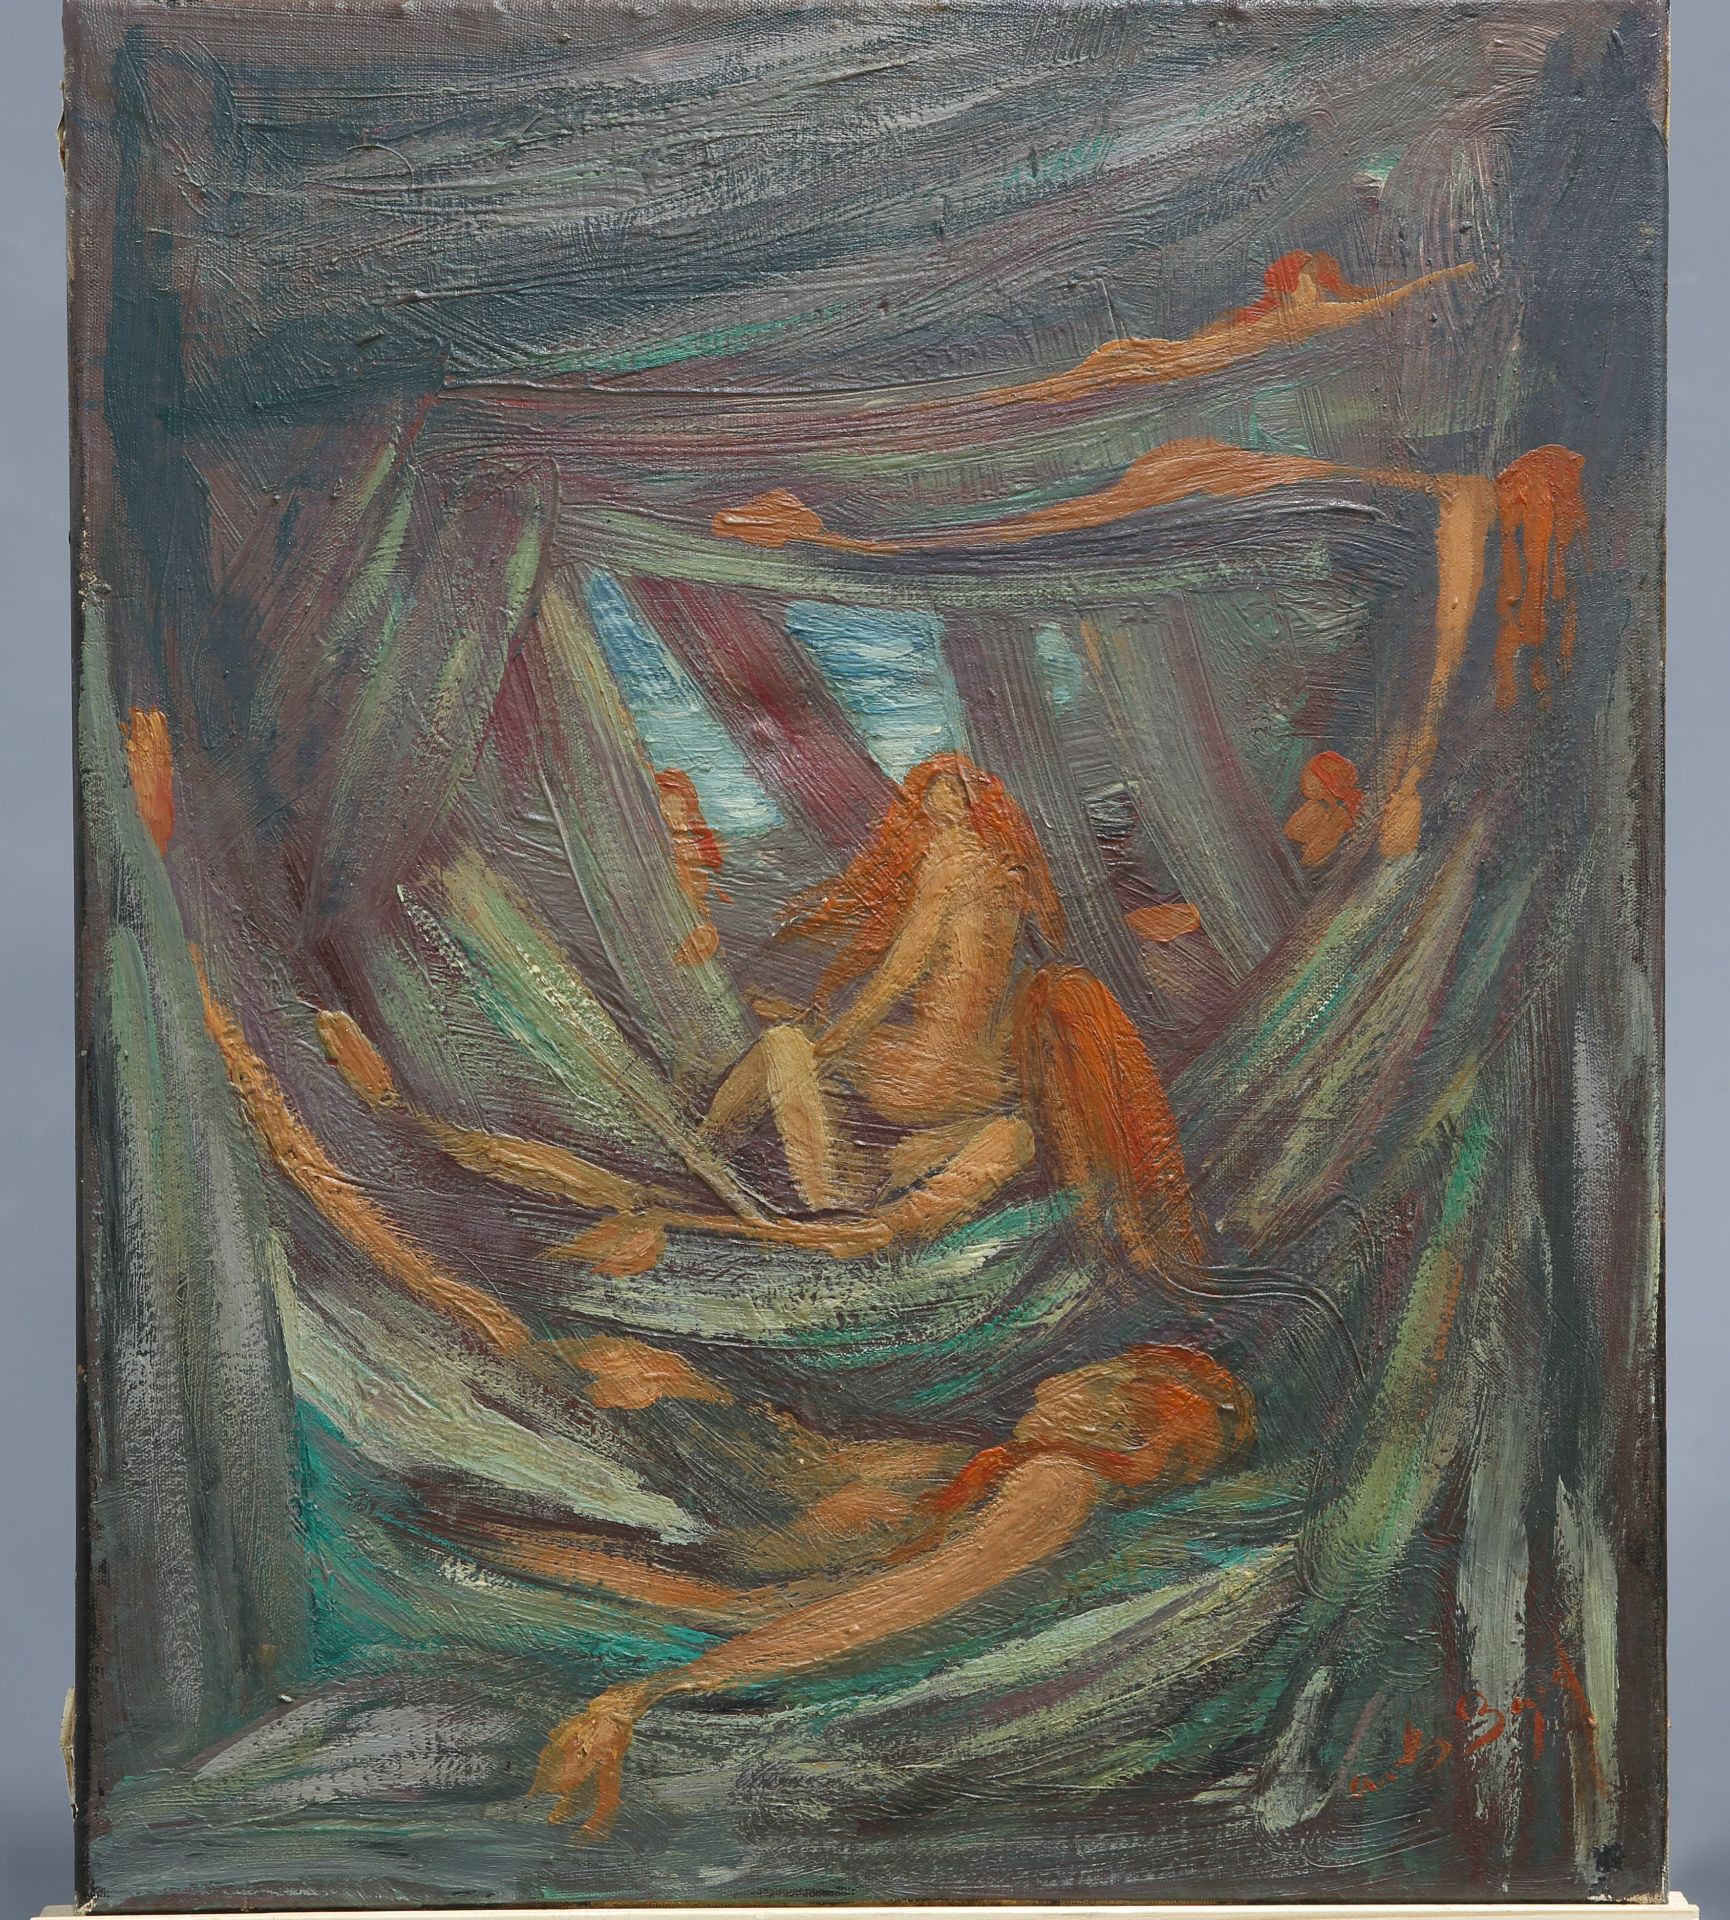 FOLLOWER OF ARTHUR BOYD (1920-1999), FIGURES IN WOODLAND, bear signature lower right, oil on canvas.